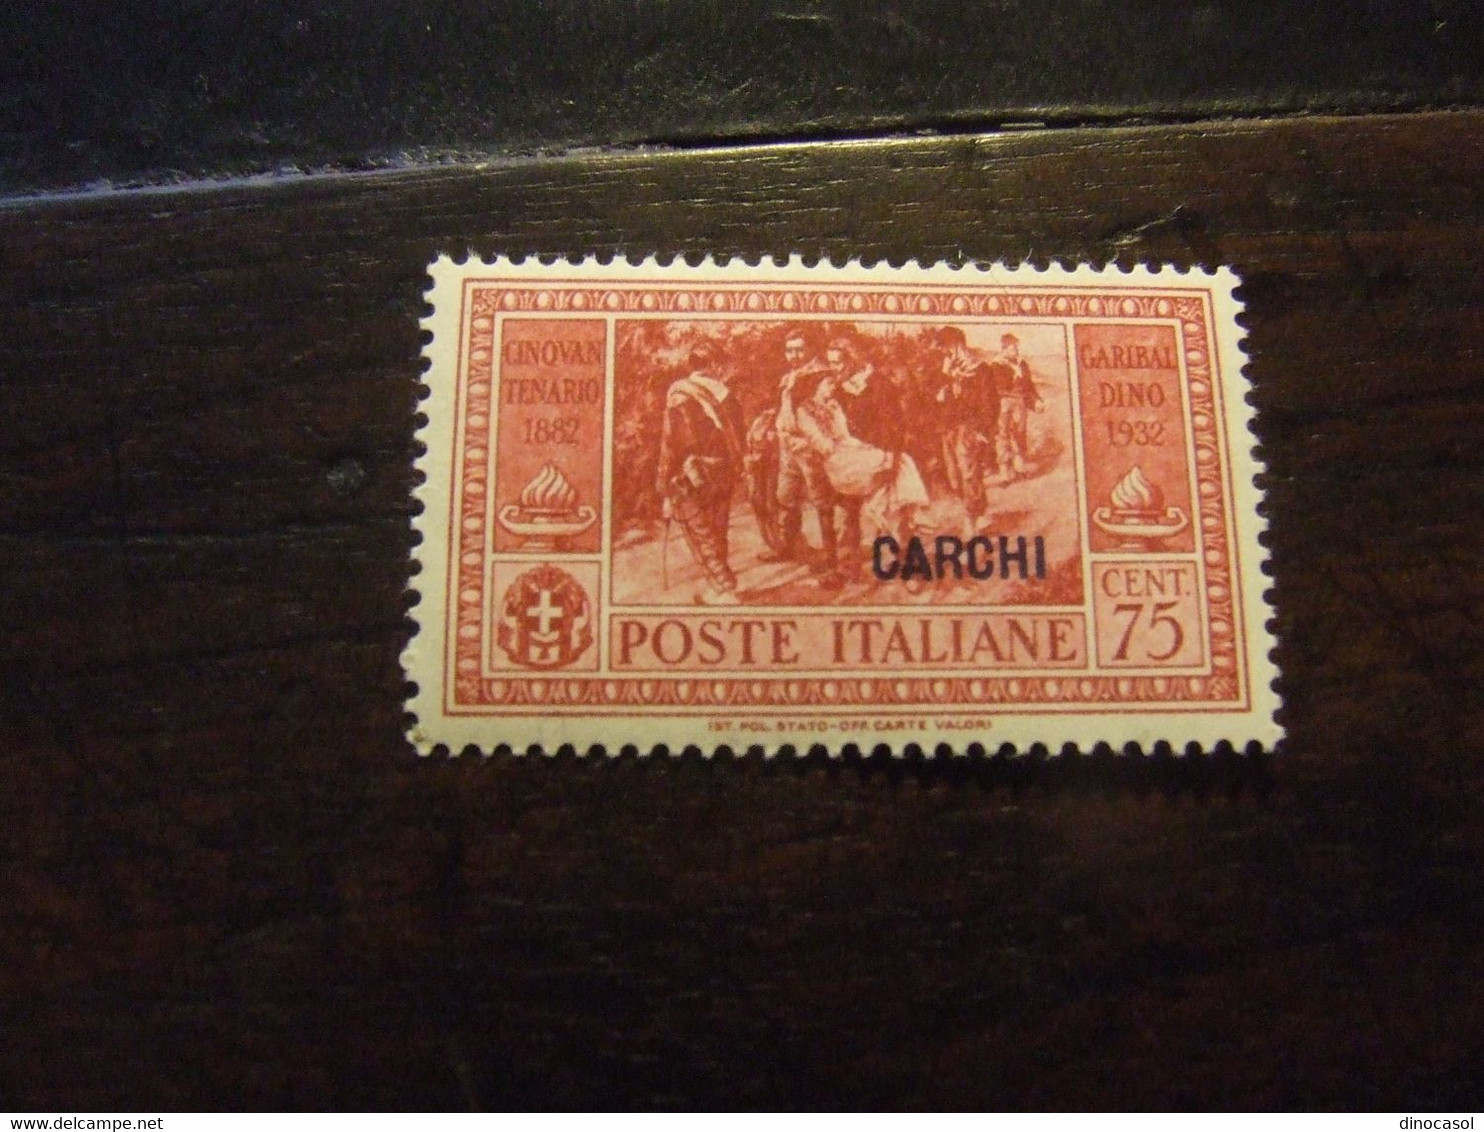 CARCHI 1932 GARIBALDI 75 C NUOVO * - Ägäis (Carchi)